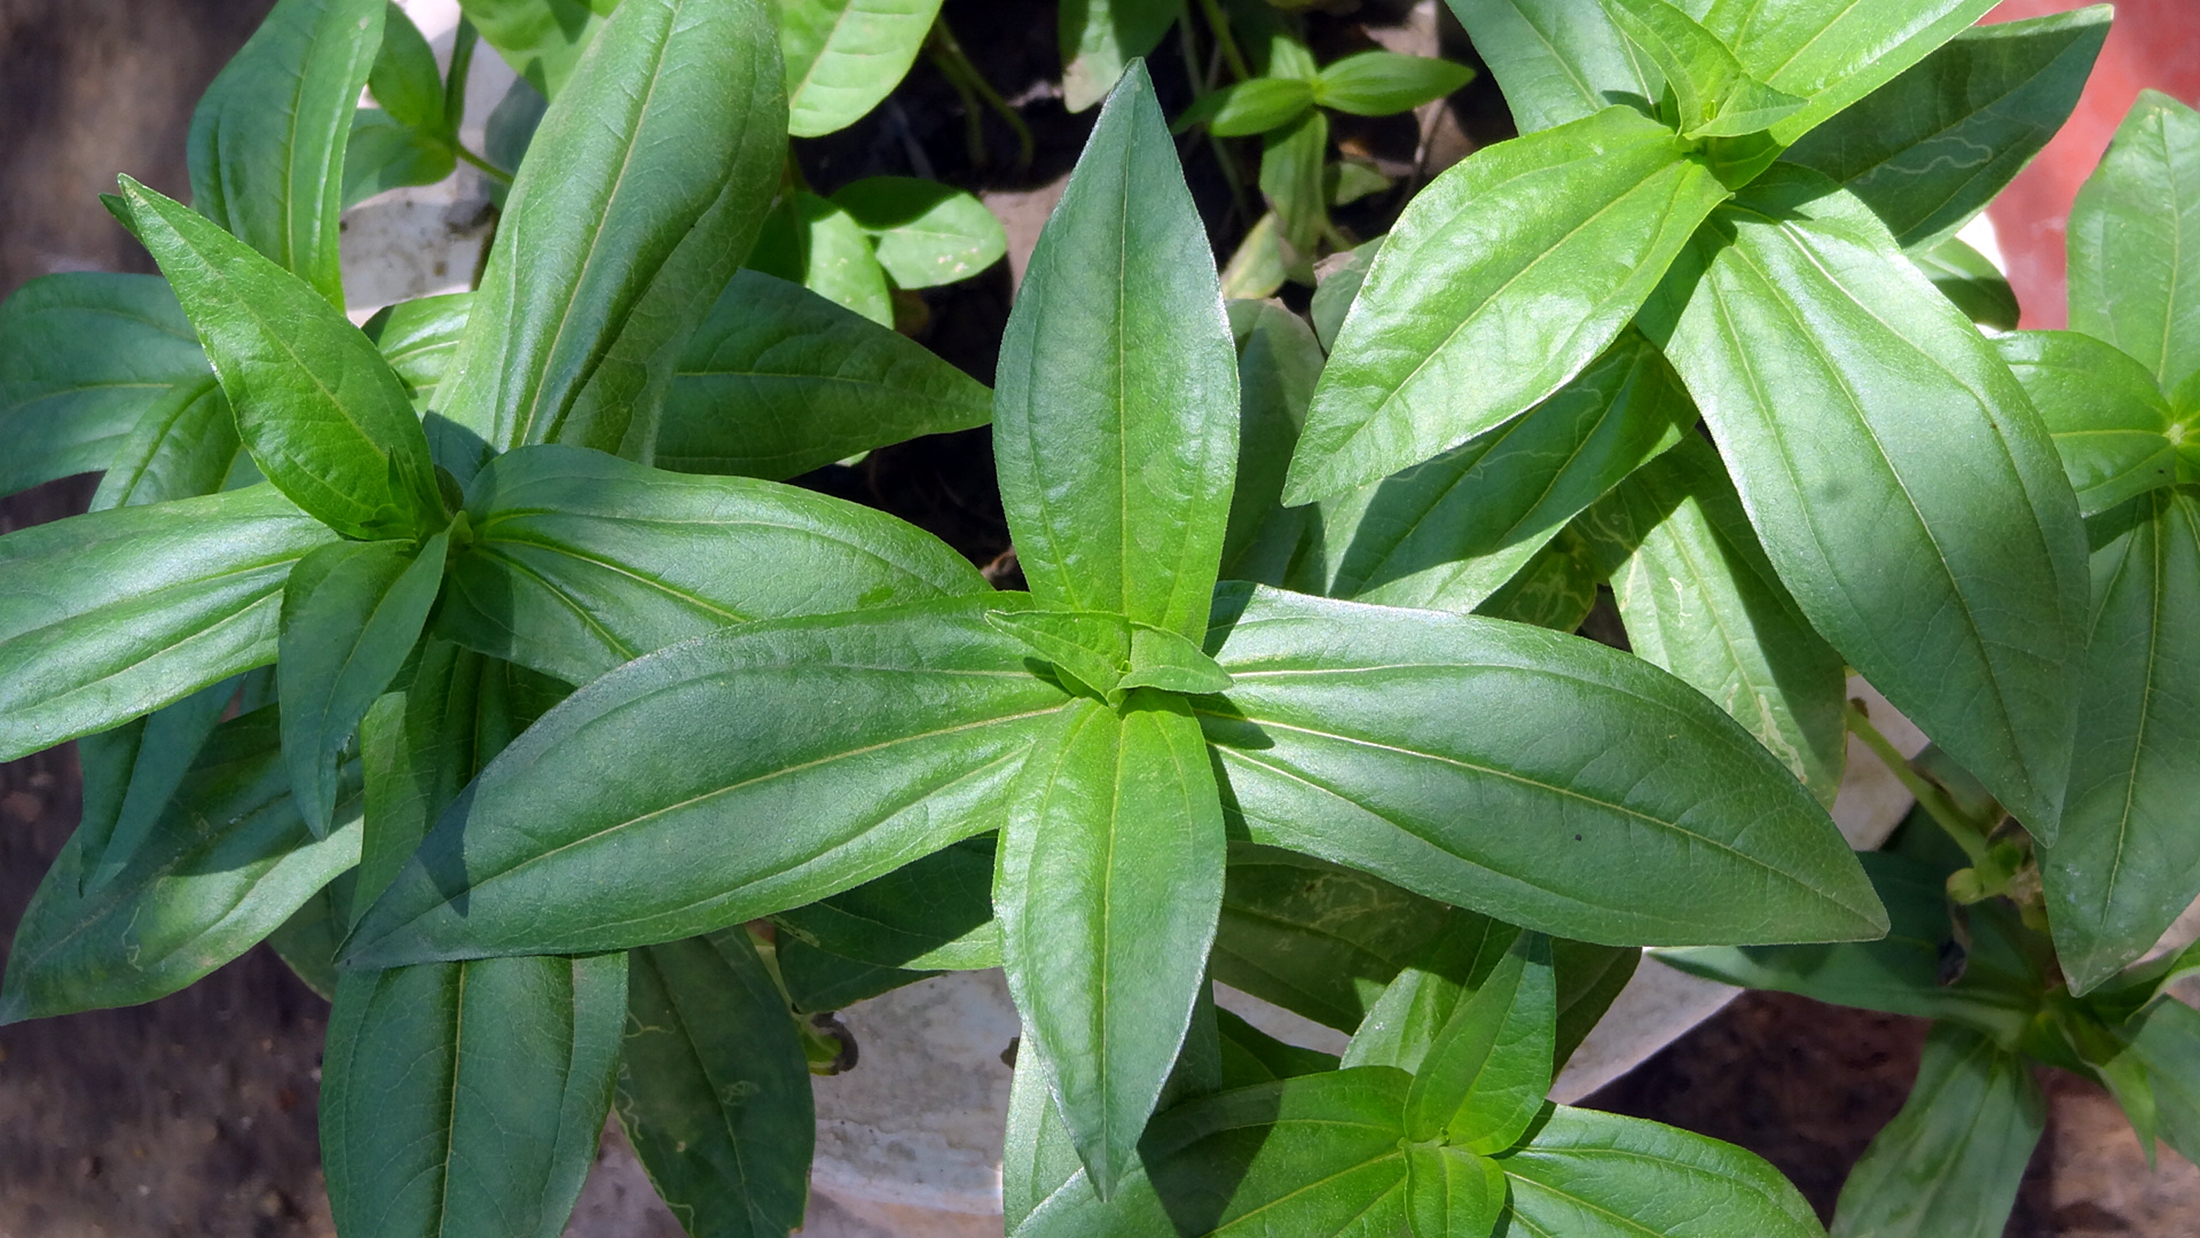 Leaves of zinnia flower in jaffna